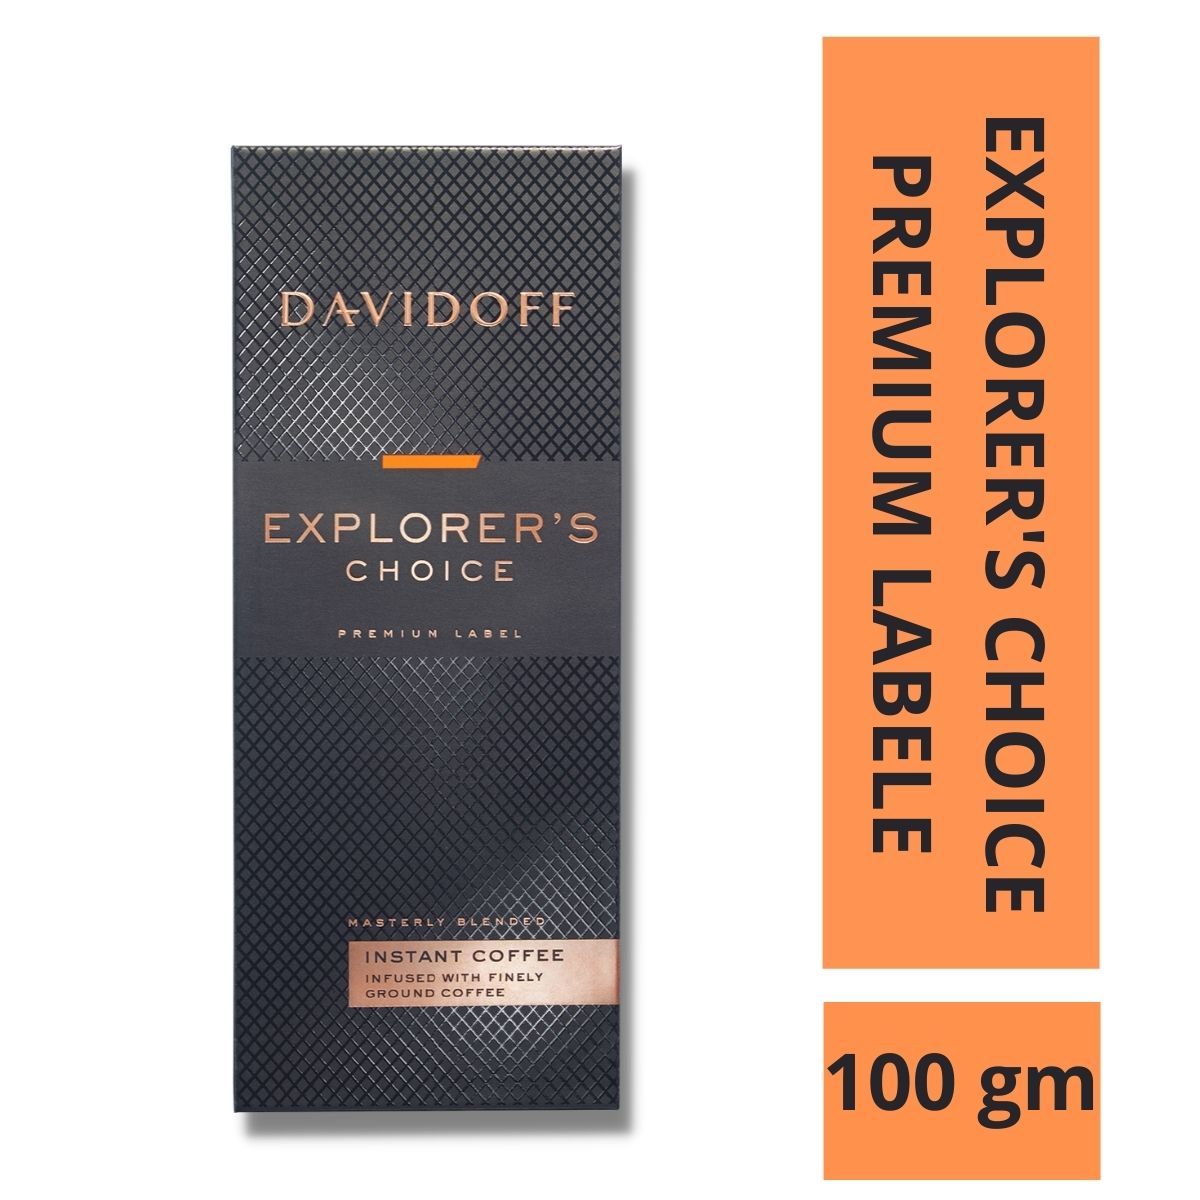 Davidoff Explorer's Choice Premium Label Masterly Blended Instant Coffee (100 g) Davidoff